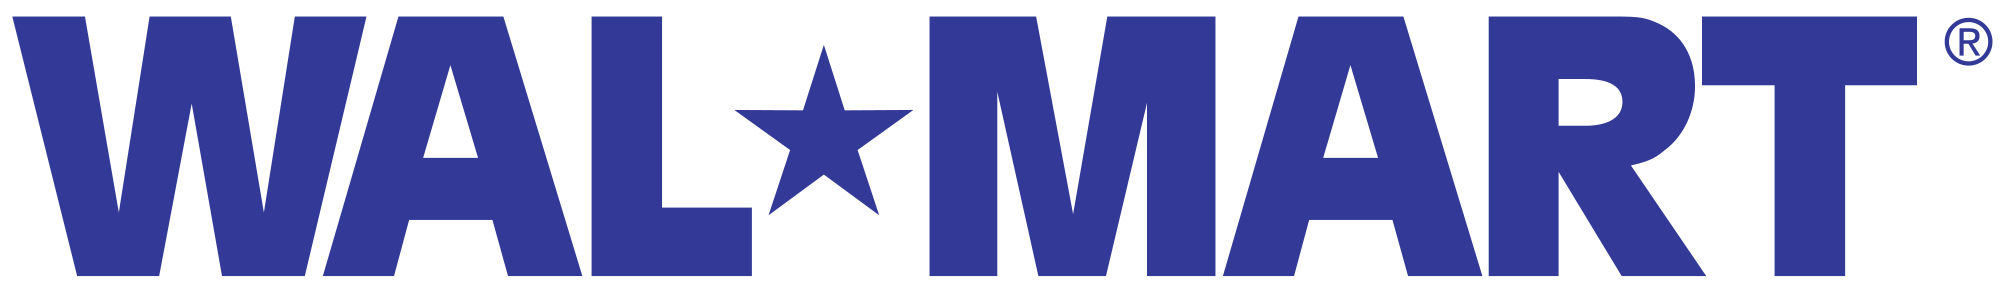 The classic Wal-Mart logo (1992-2008).